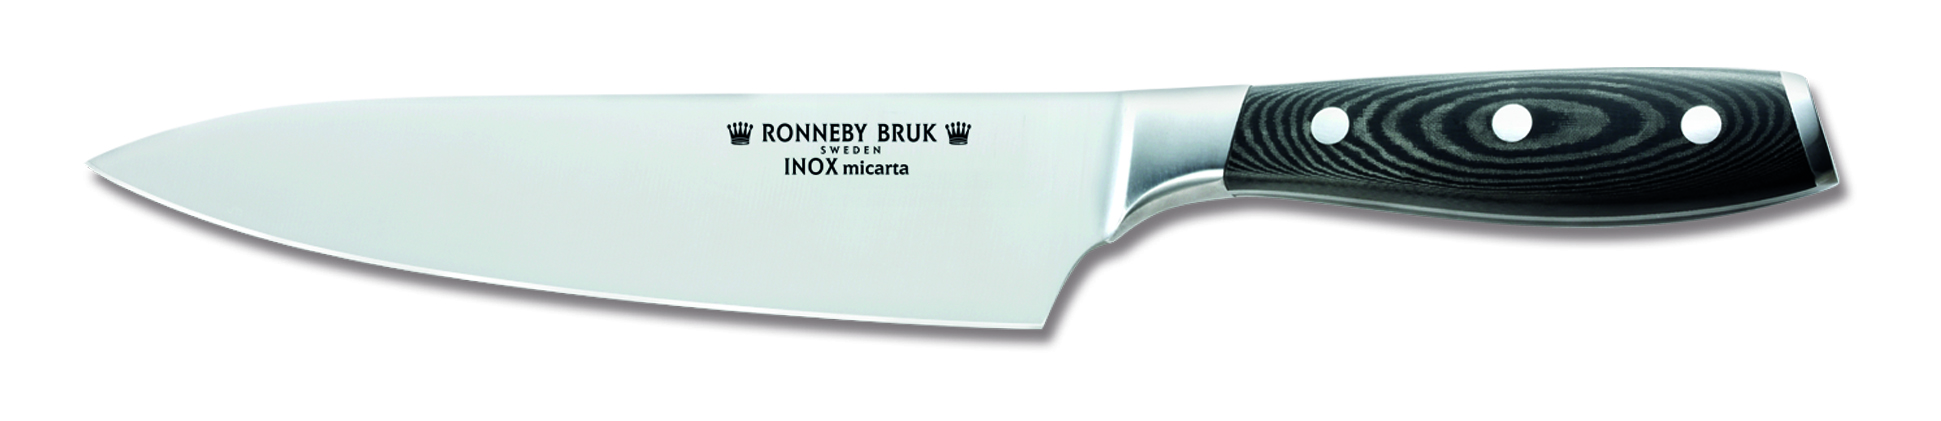 90704 Fransk kockkniv 20 cm